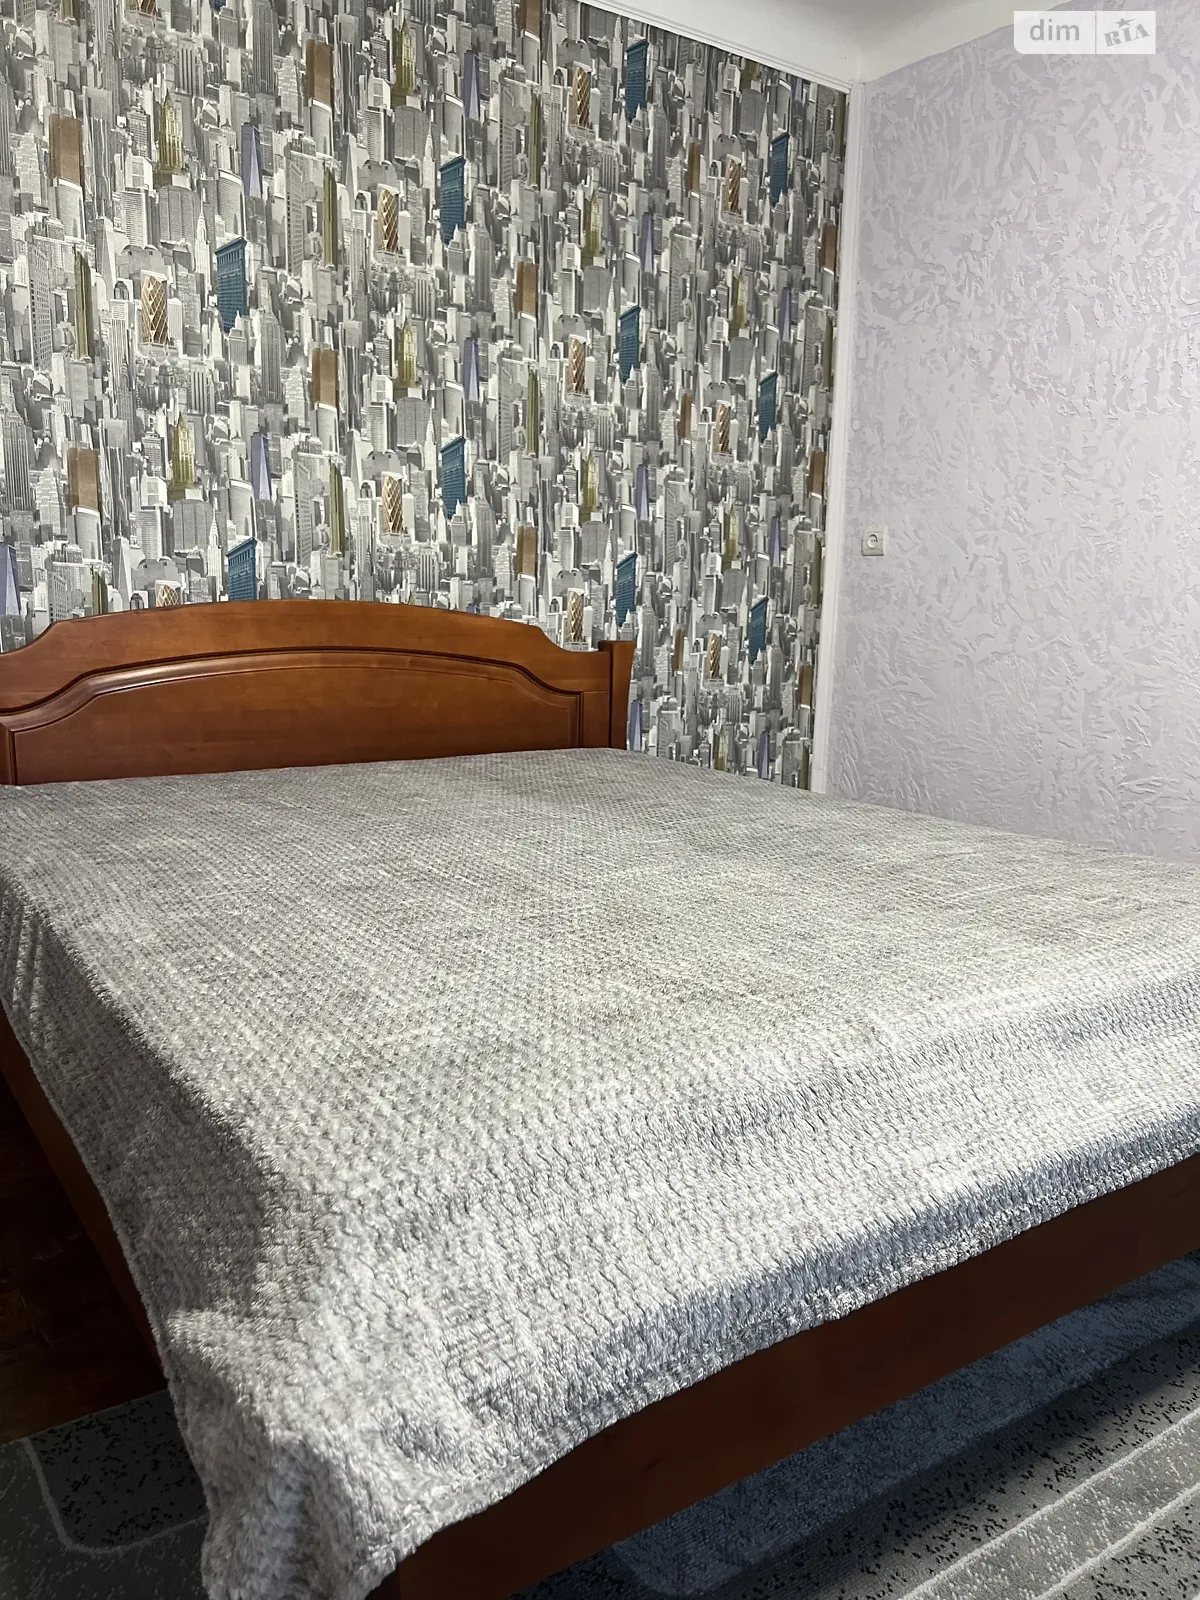 1-кімнатна квартира у Запоріжжі, цена: 750 грн